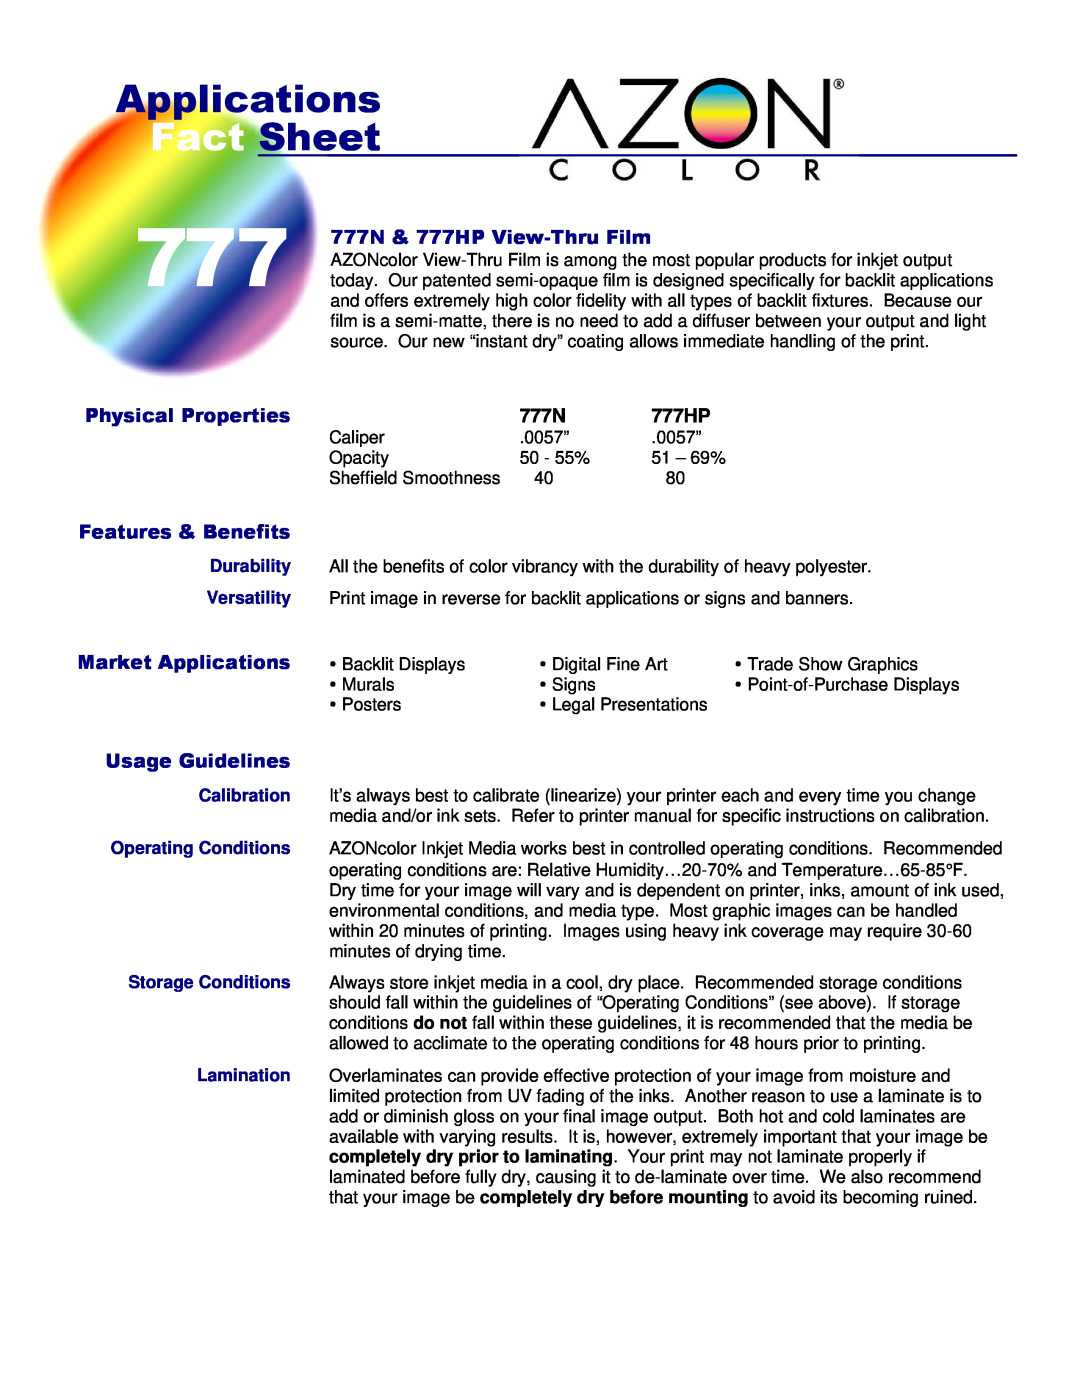 Epson manual Applications, Durability, Versatility, Fact Sheet, 777N & 777HP View-Thru Film, Physical Properties 